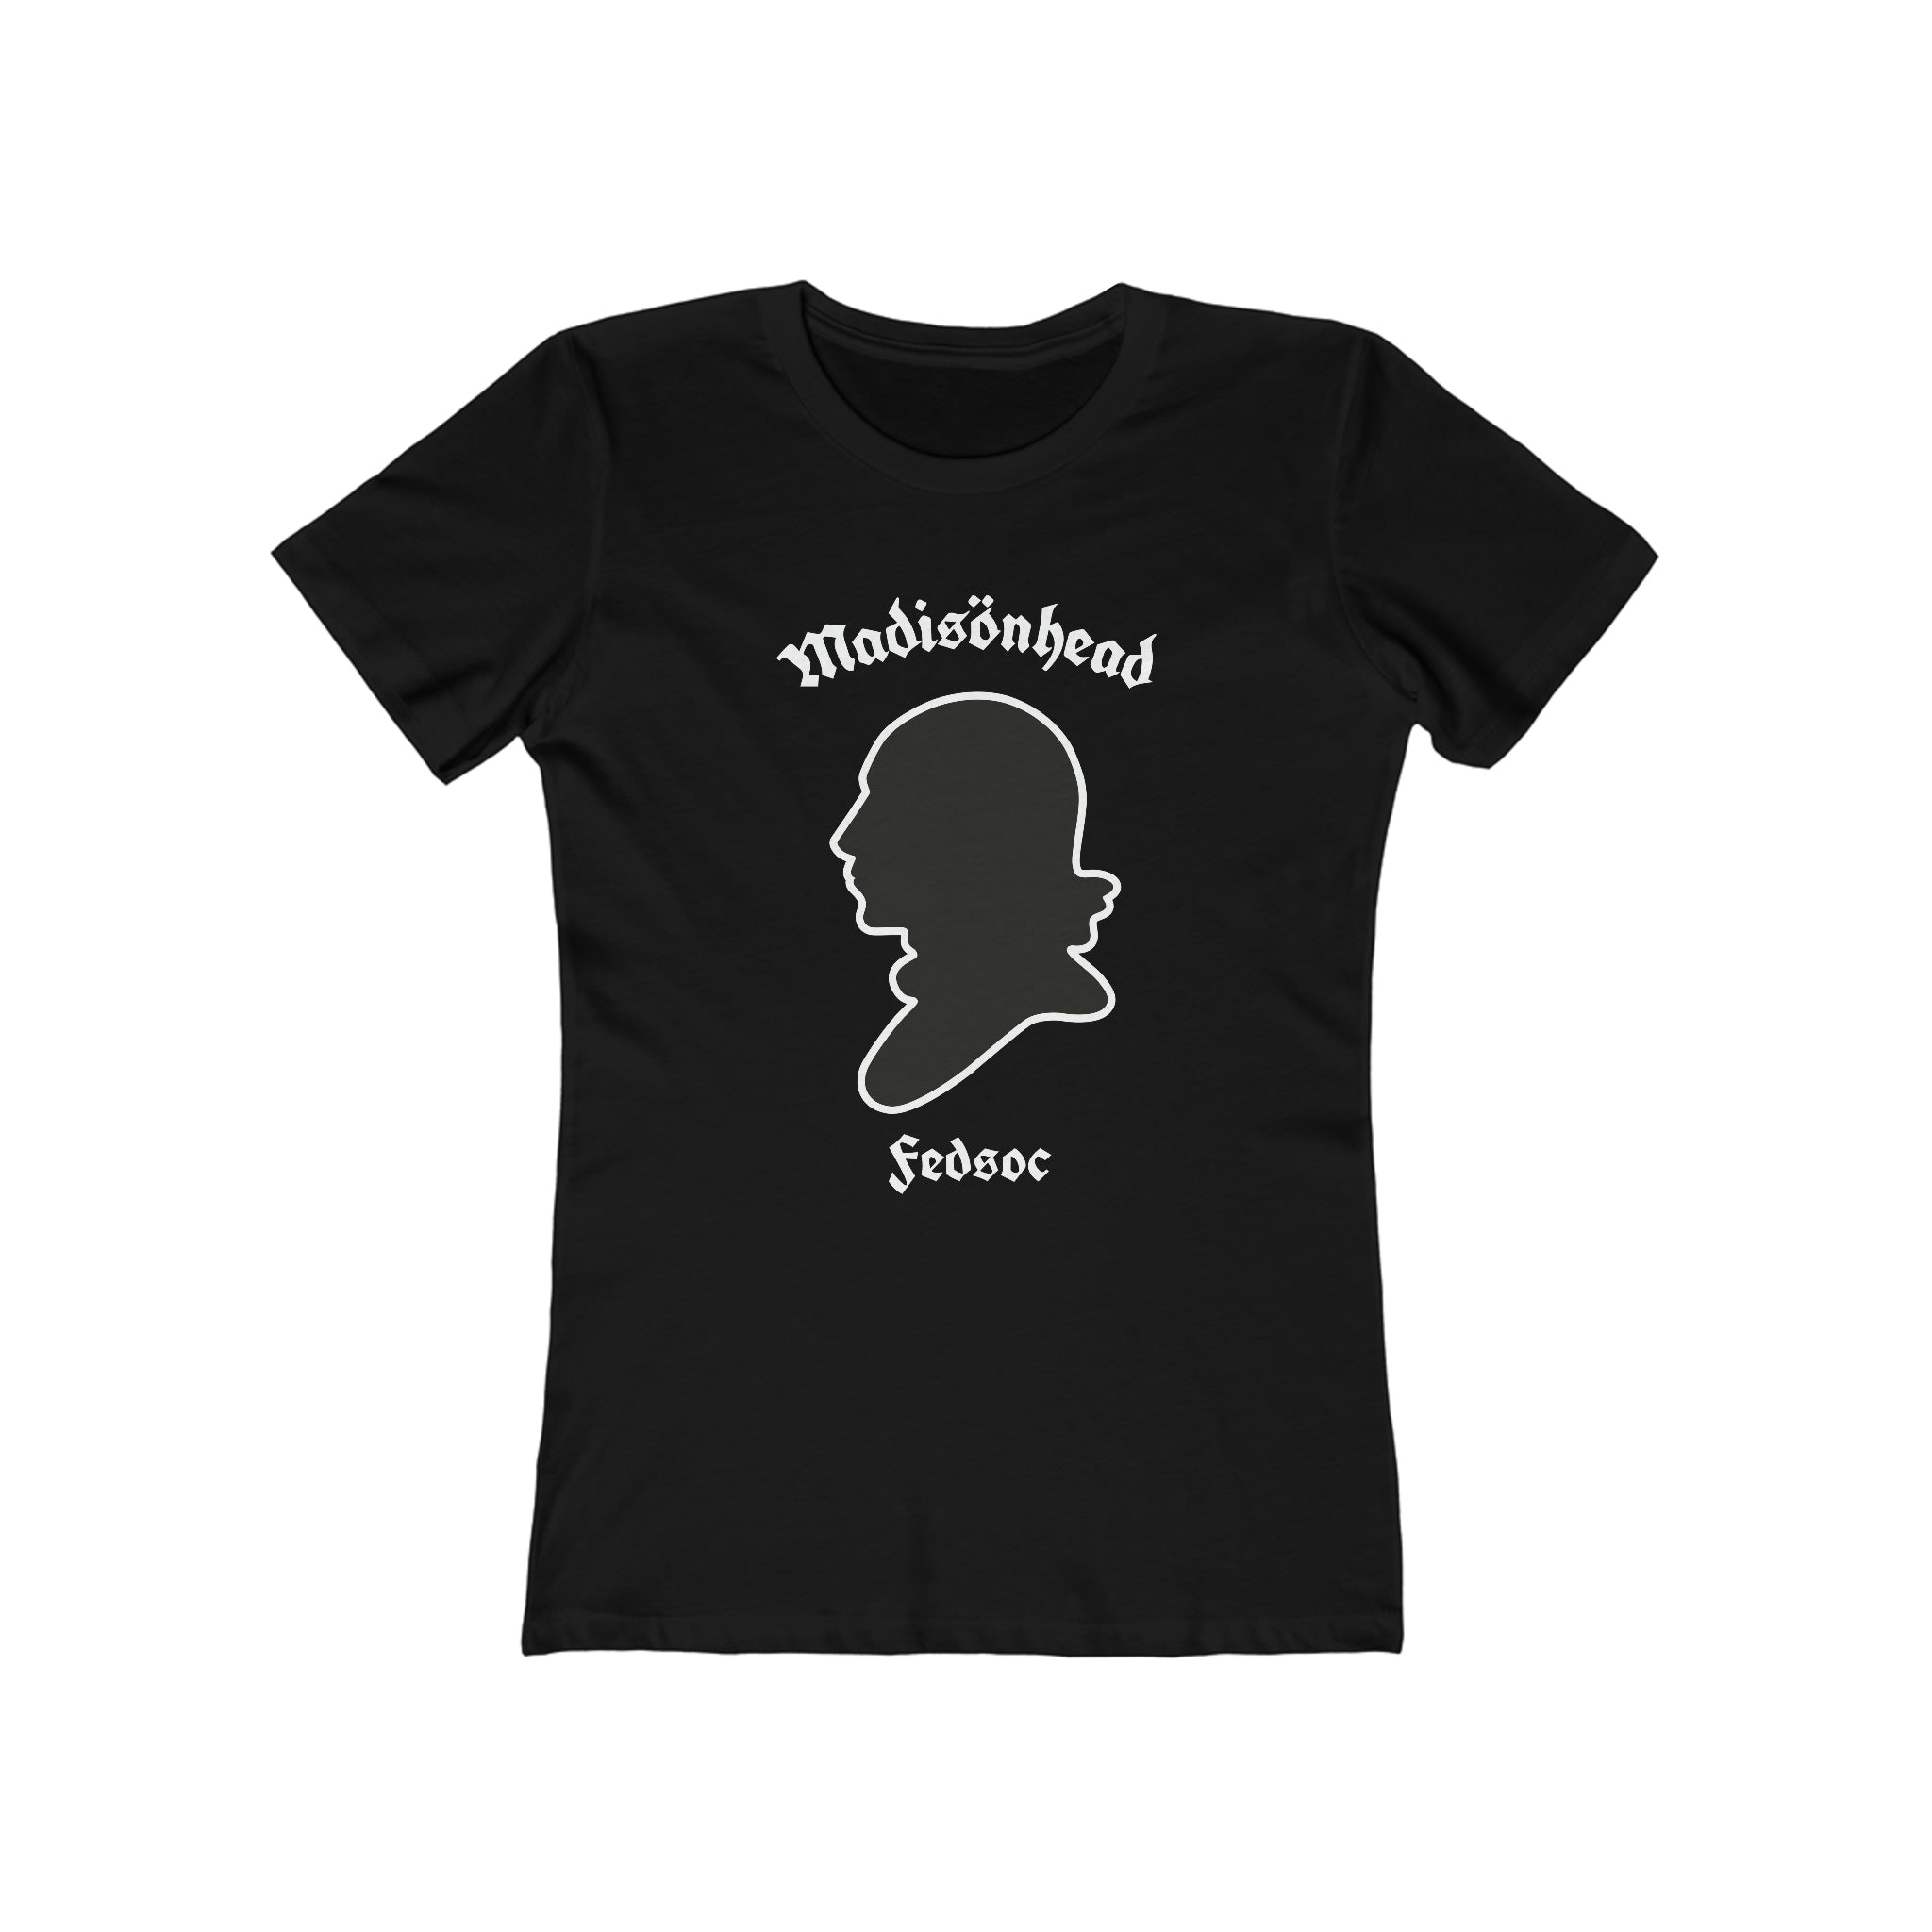 Madisonhead Women's Shirt (Fed Soc)